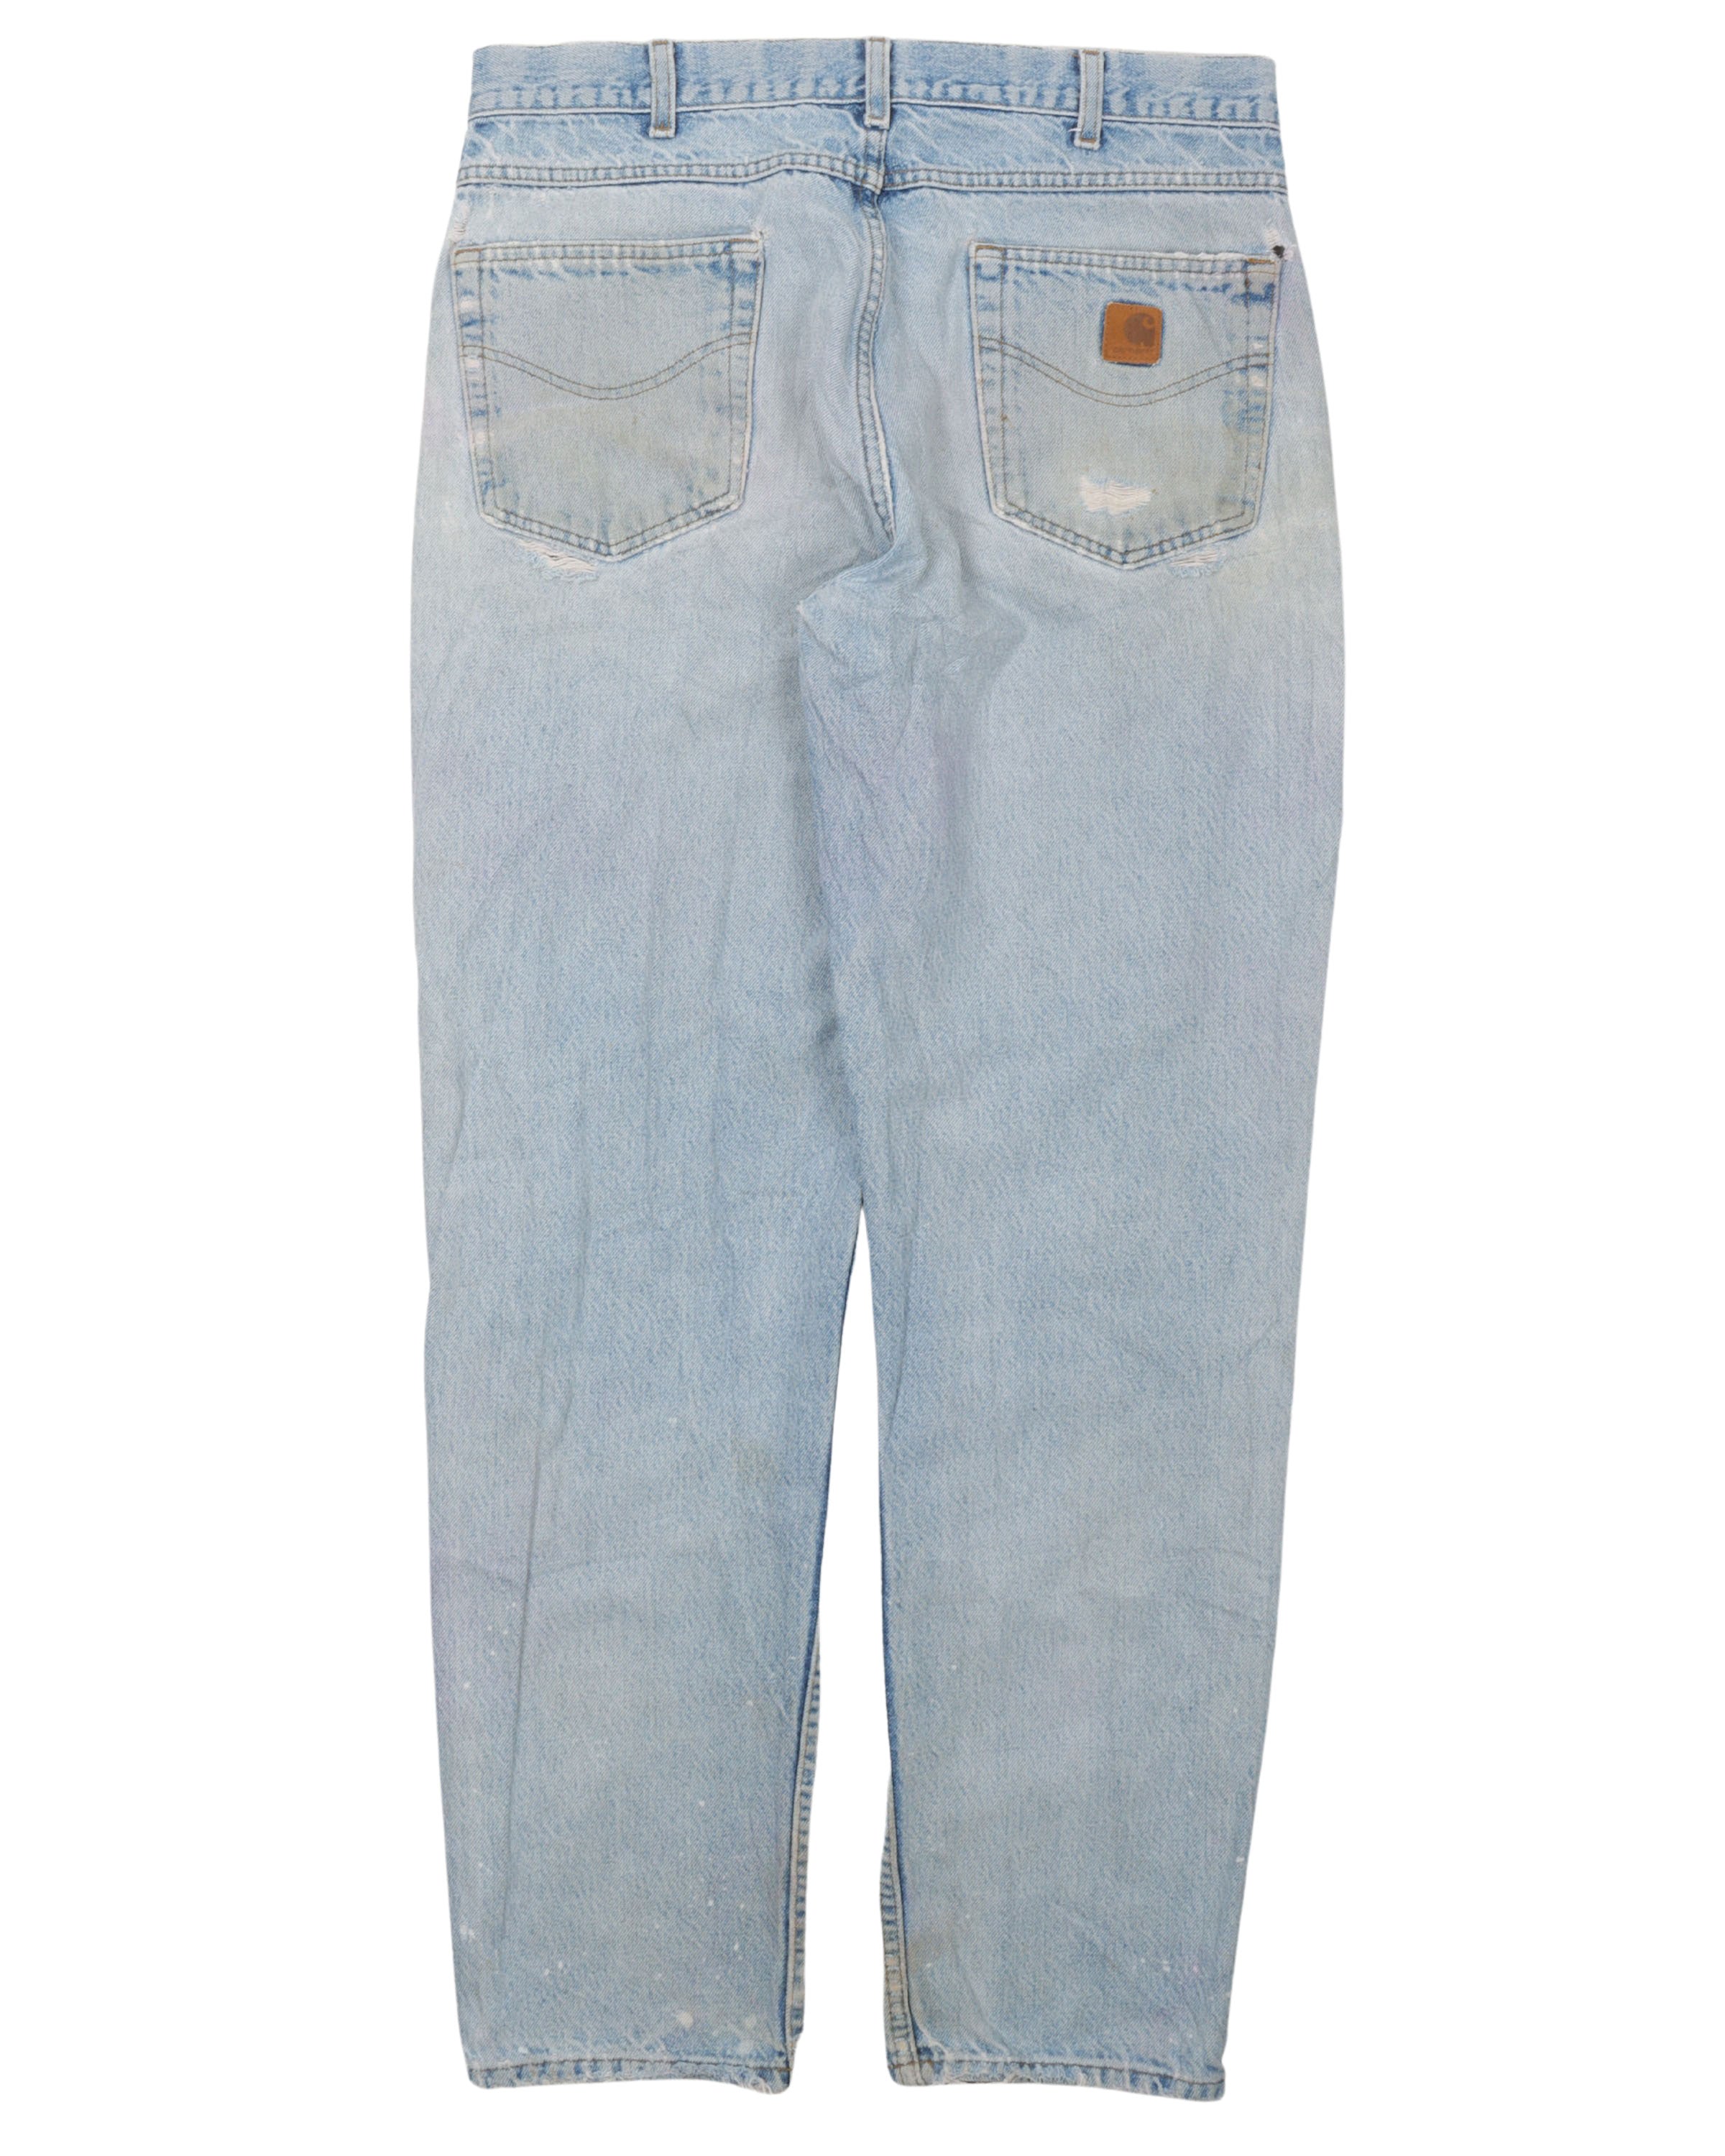 Carhartt Light Wash Jeans